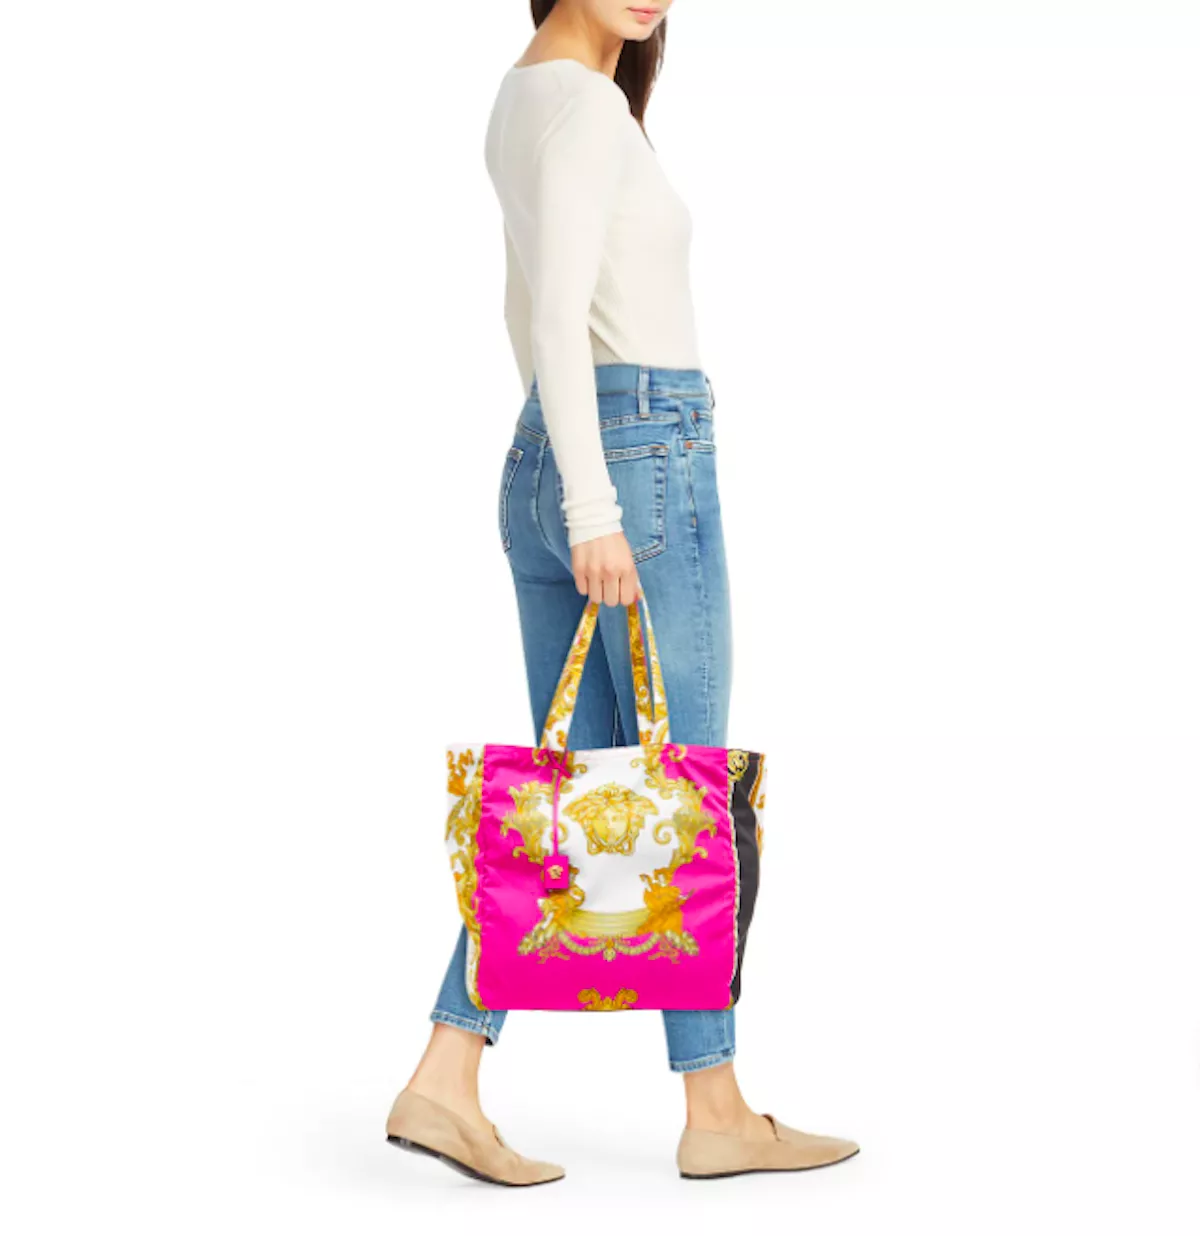 My dream purse at Macy's it's an Ann Klein | Cheap purses, Popular purses,  Trending handbag